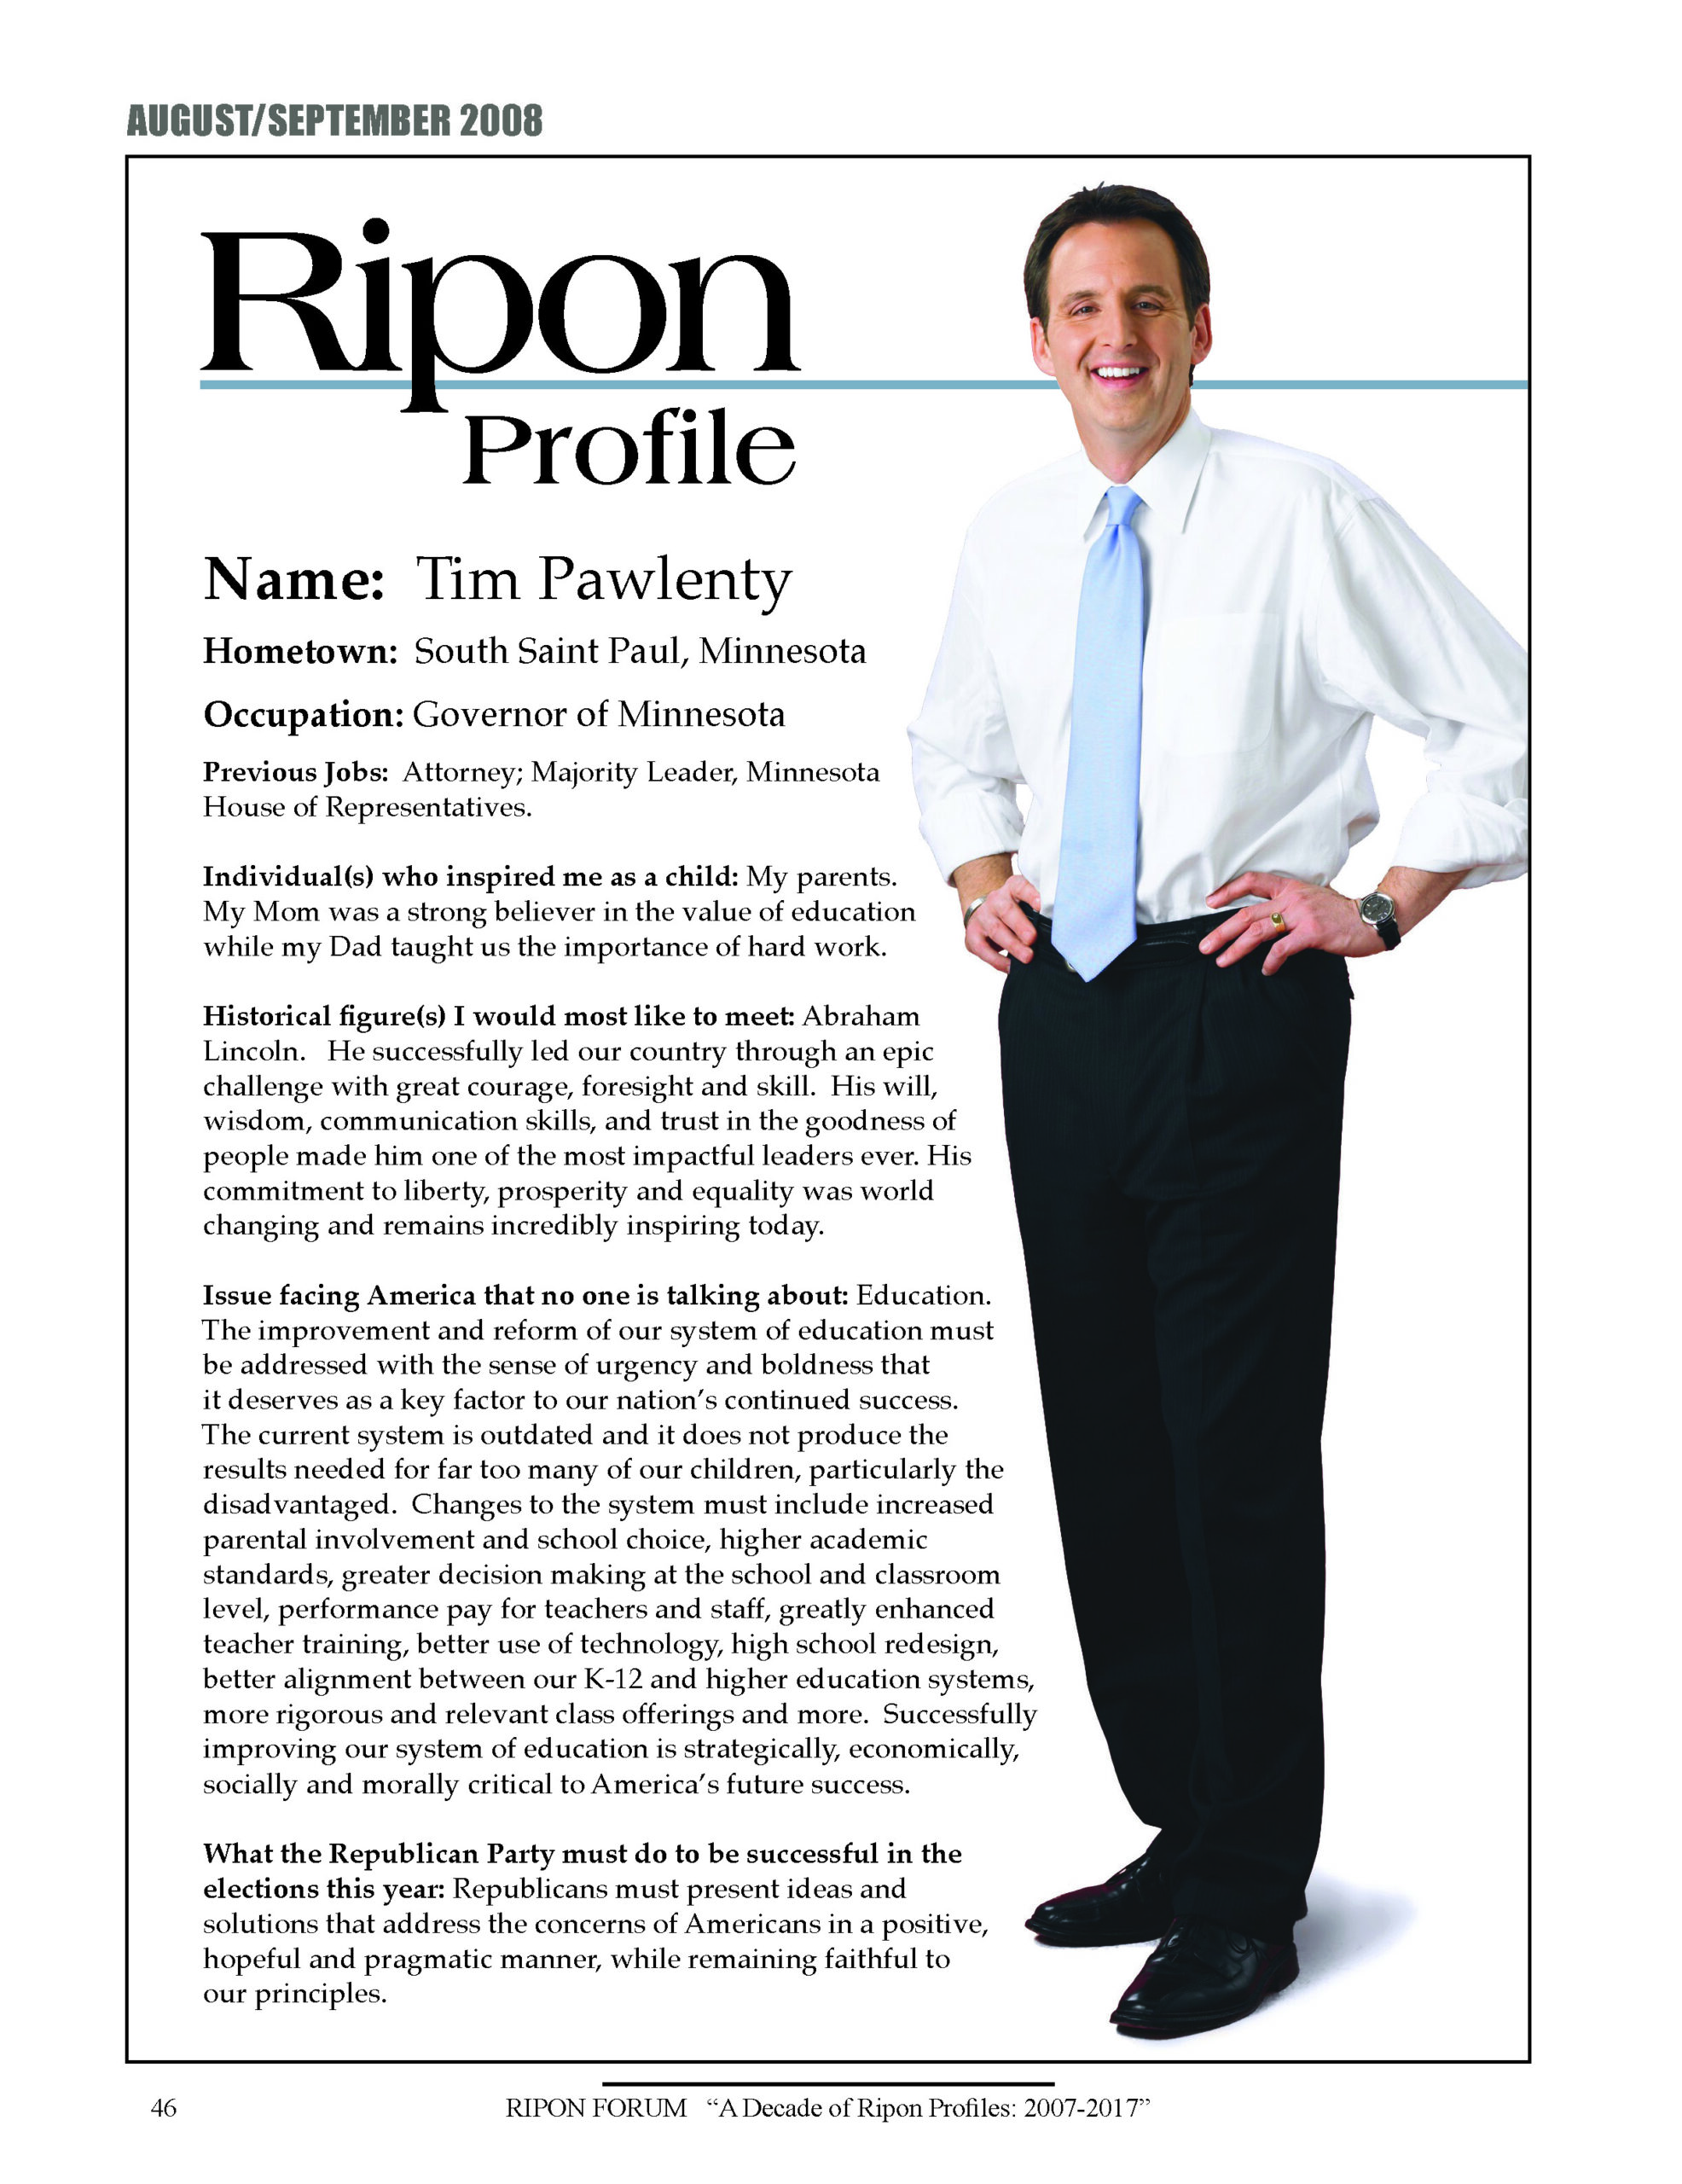 Ripon Profile of Tim Pawlenty